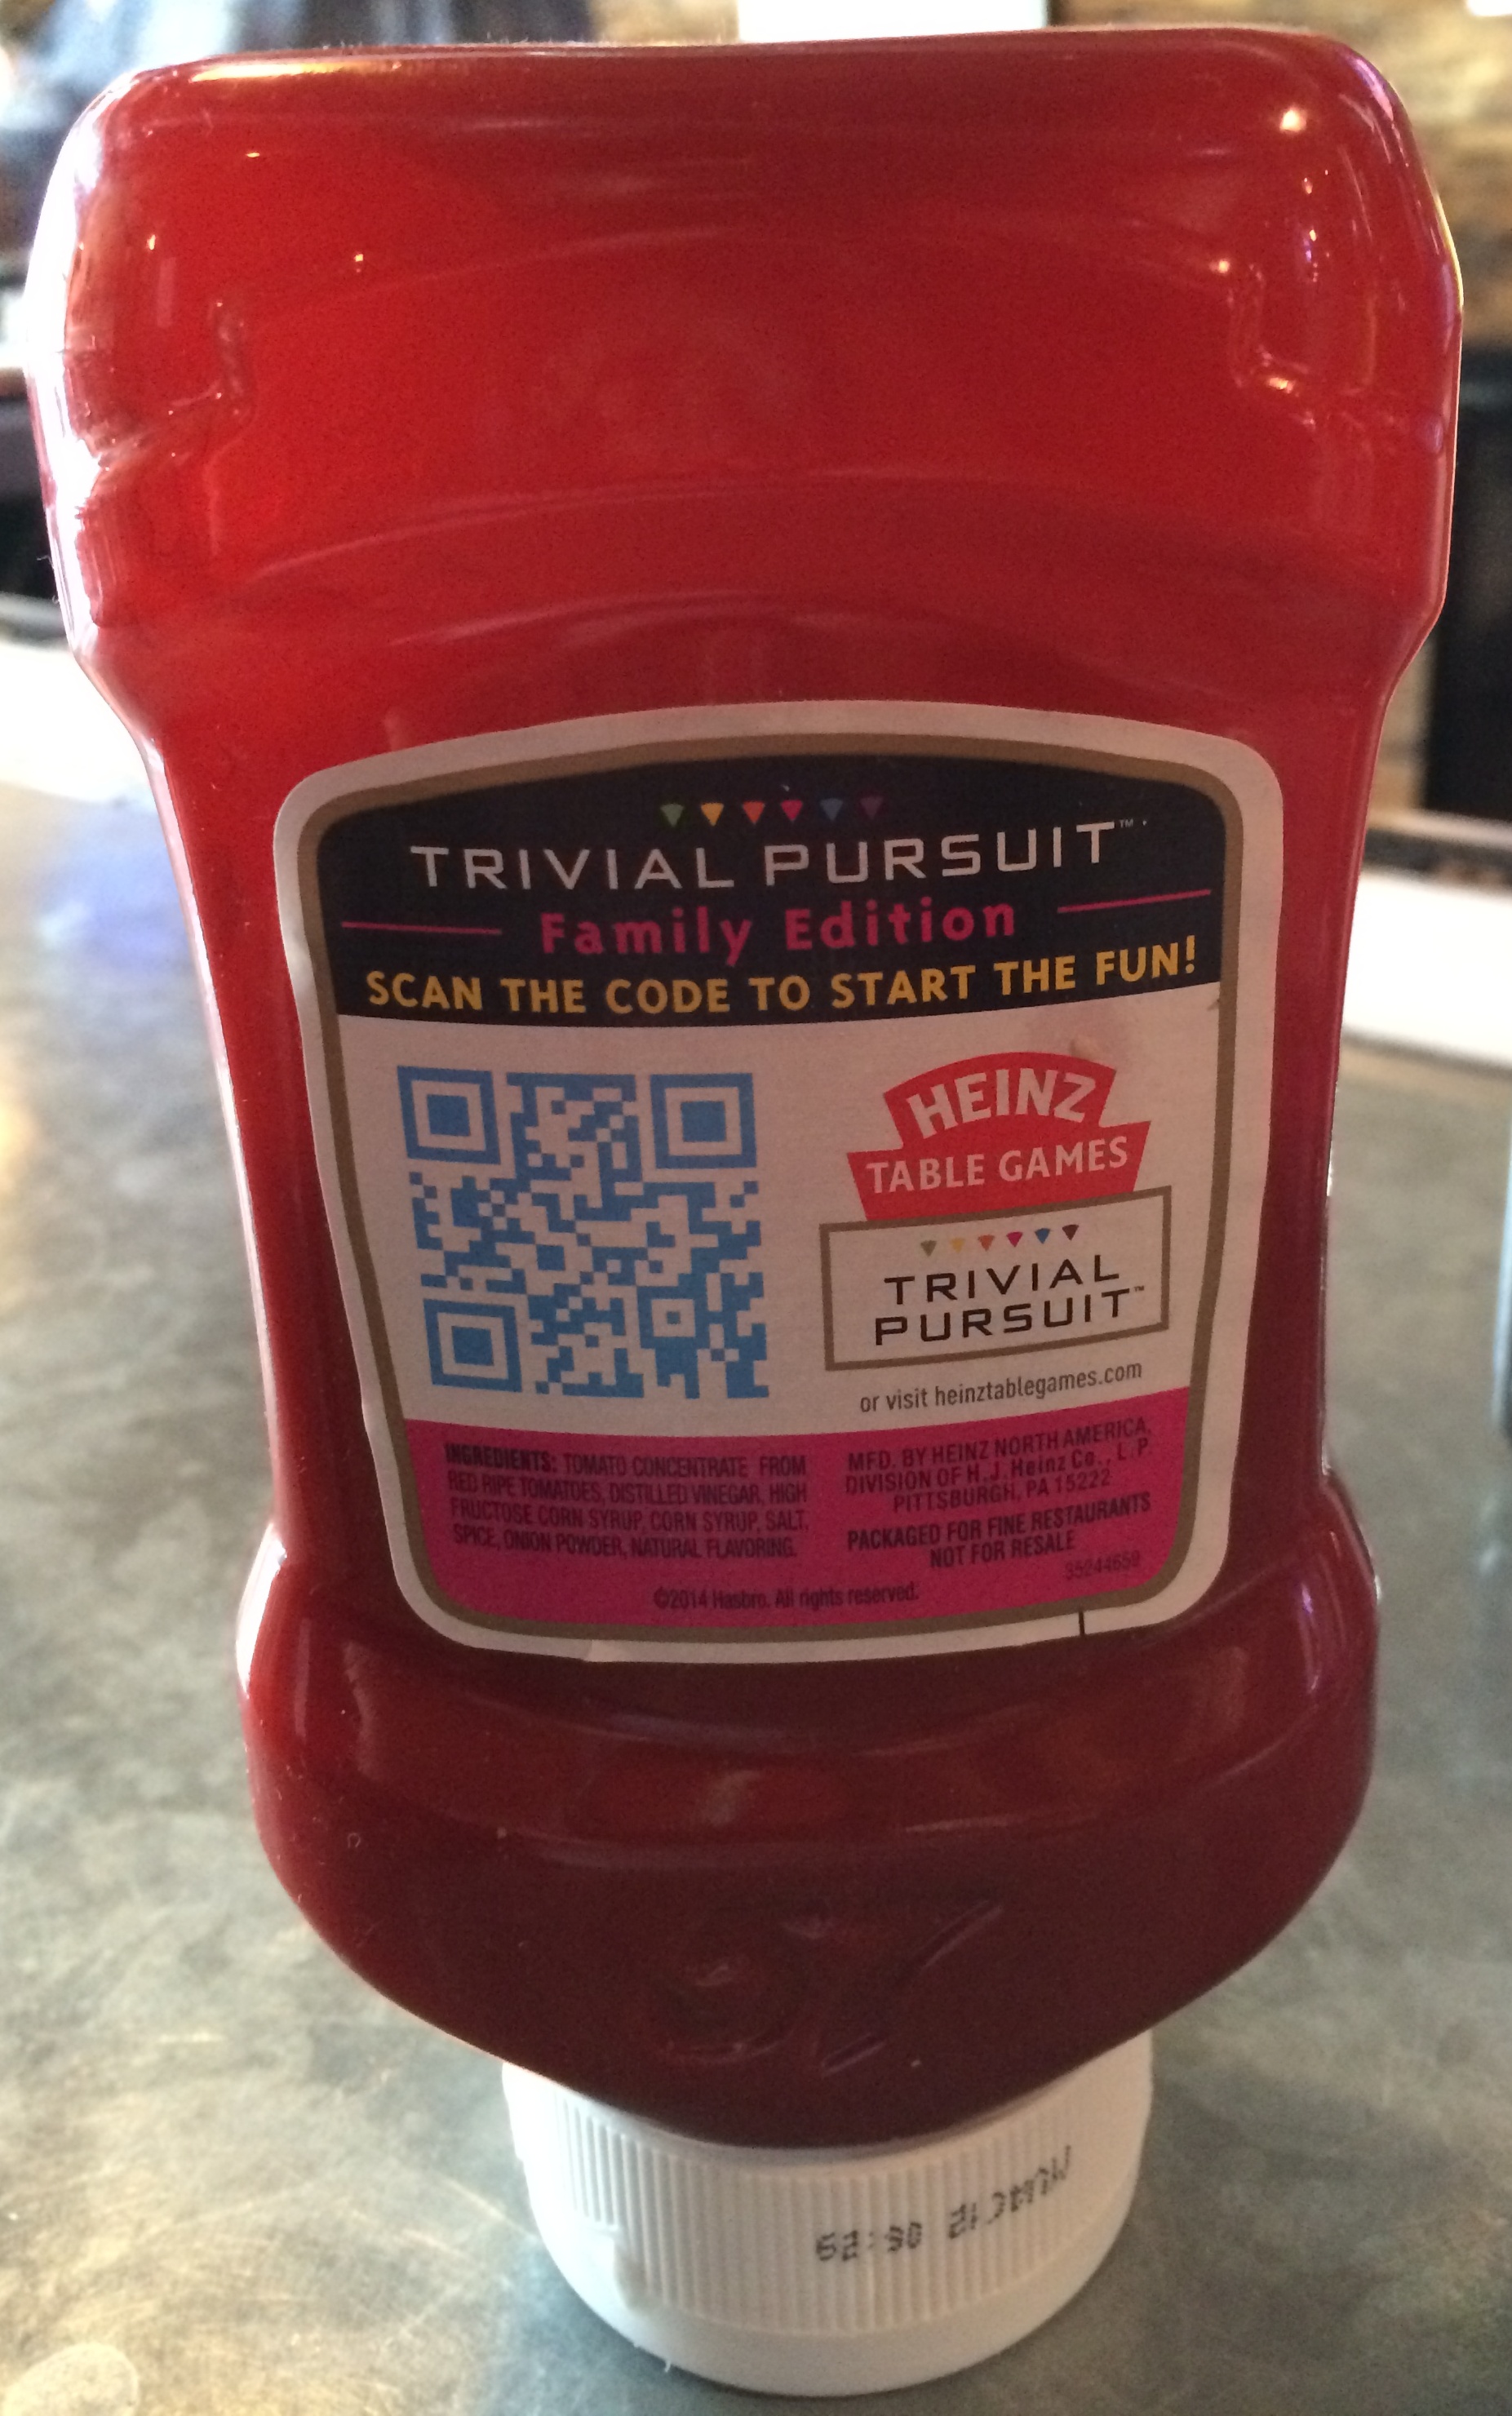 Heinz Label with Trivial Pursuit QR Code